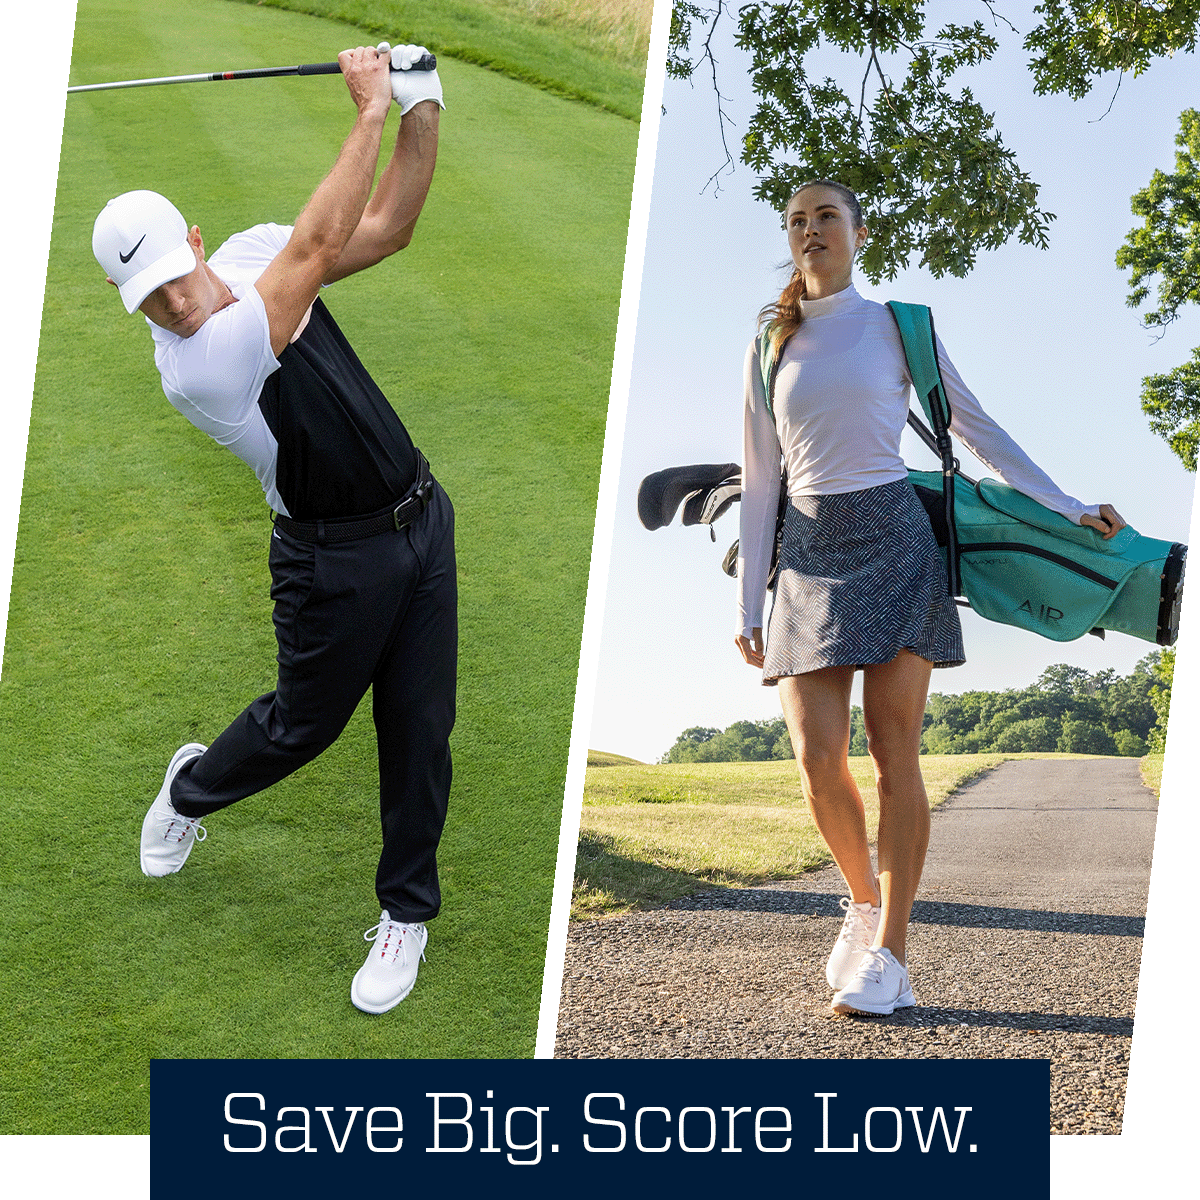 Save big. Score low.